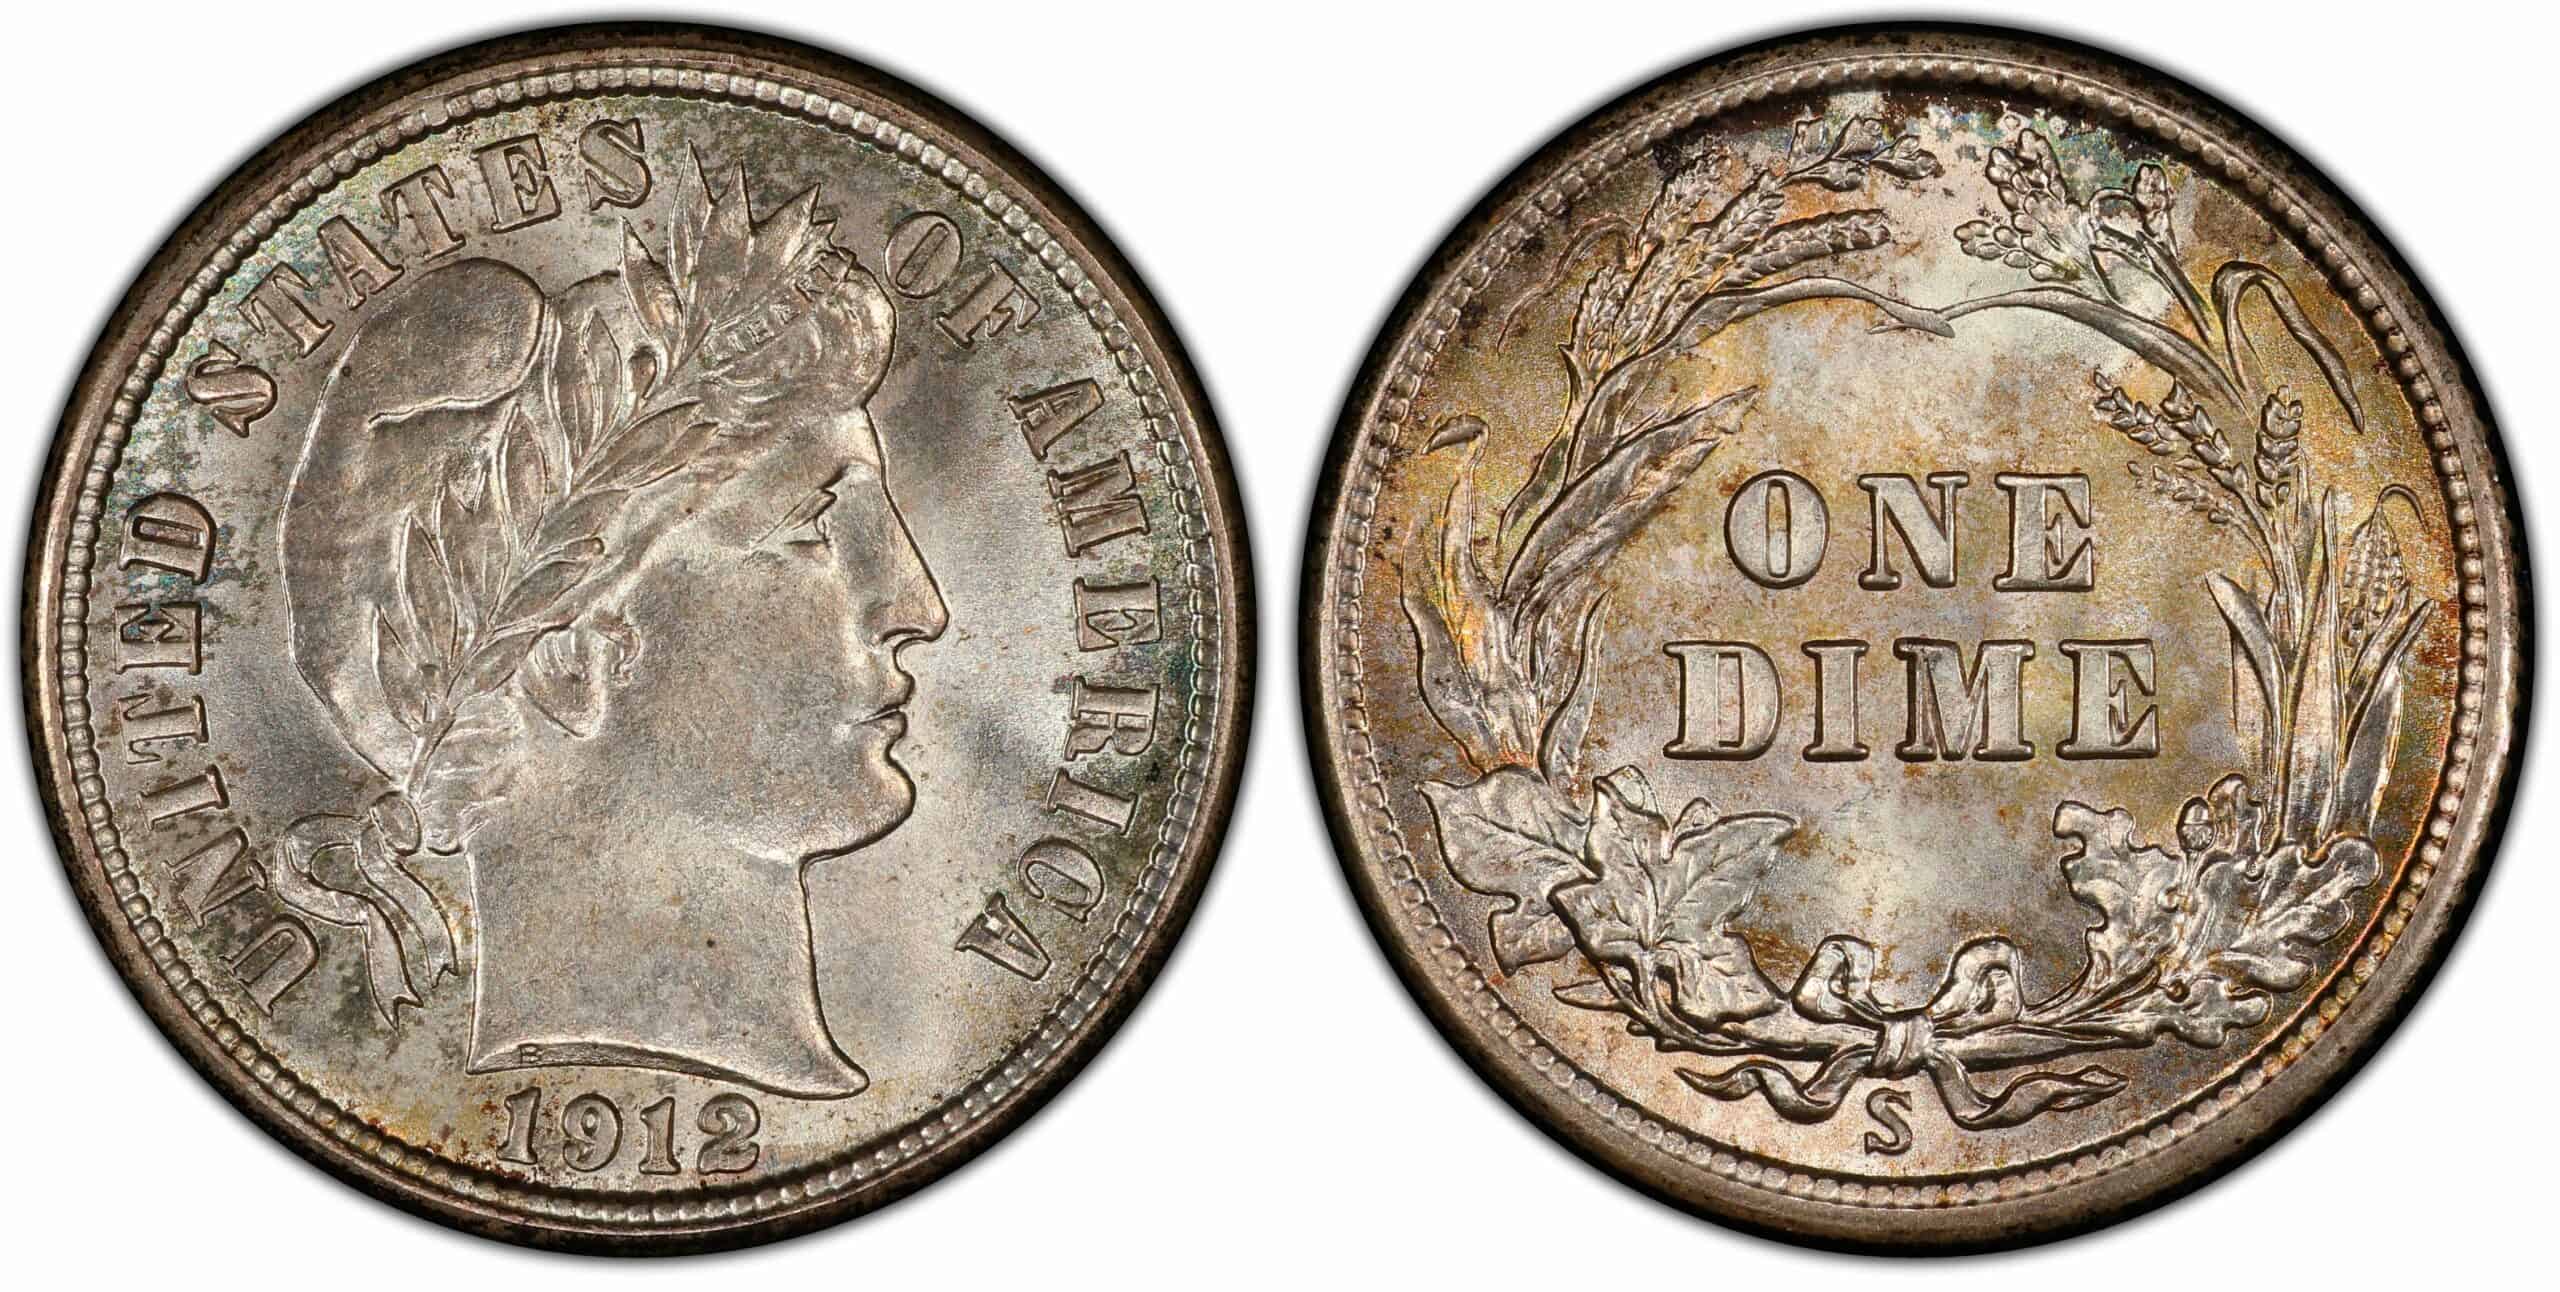 1912 S Dime Coin